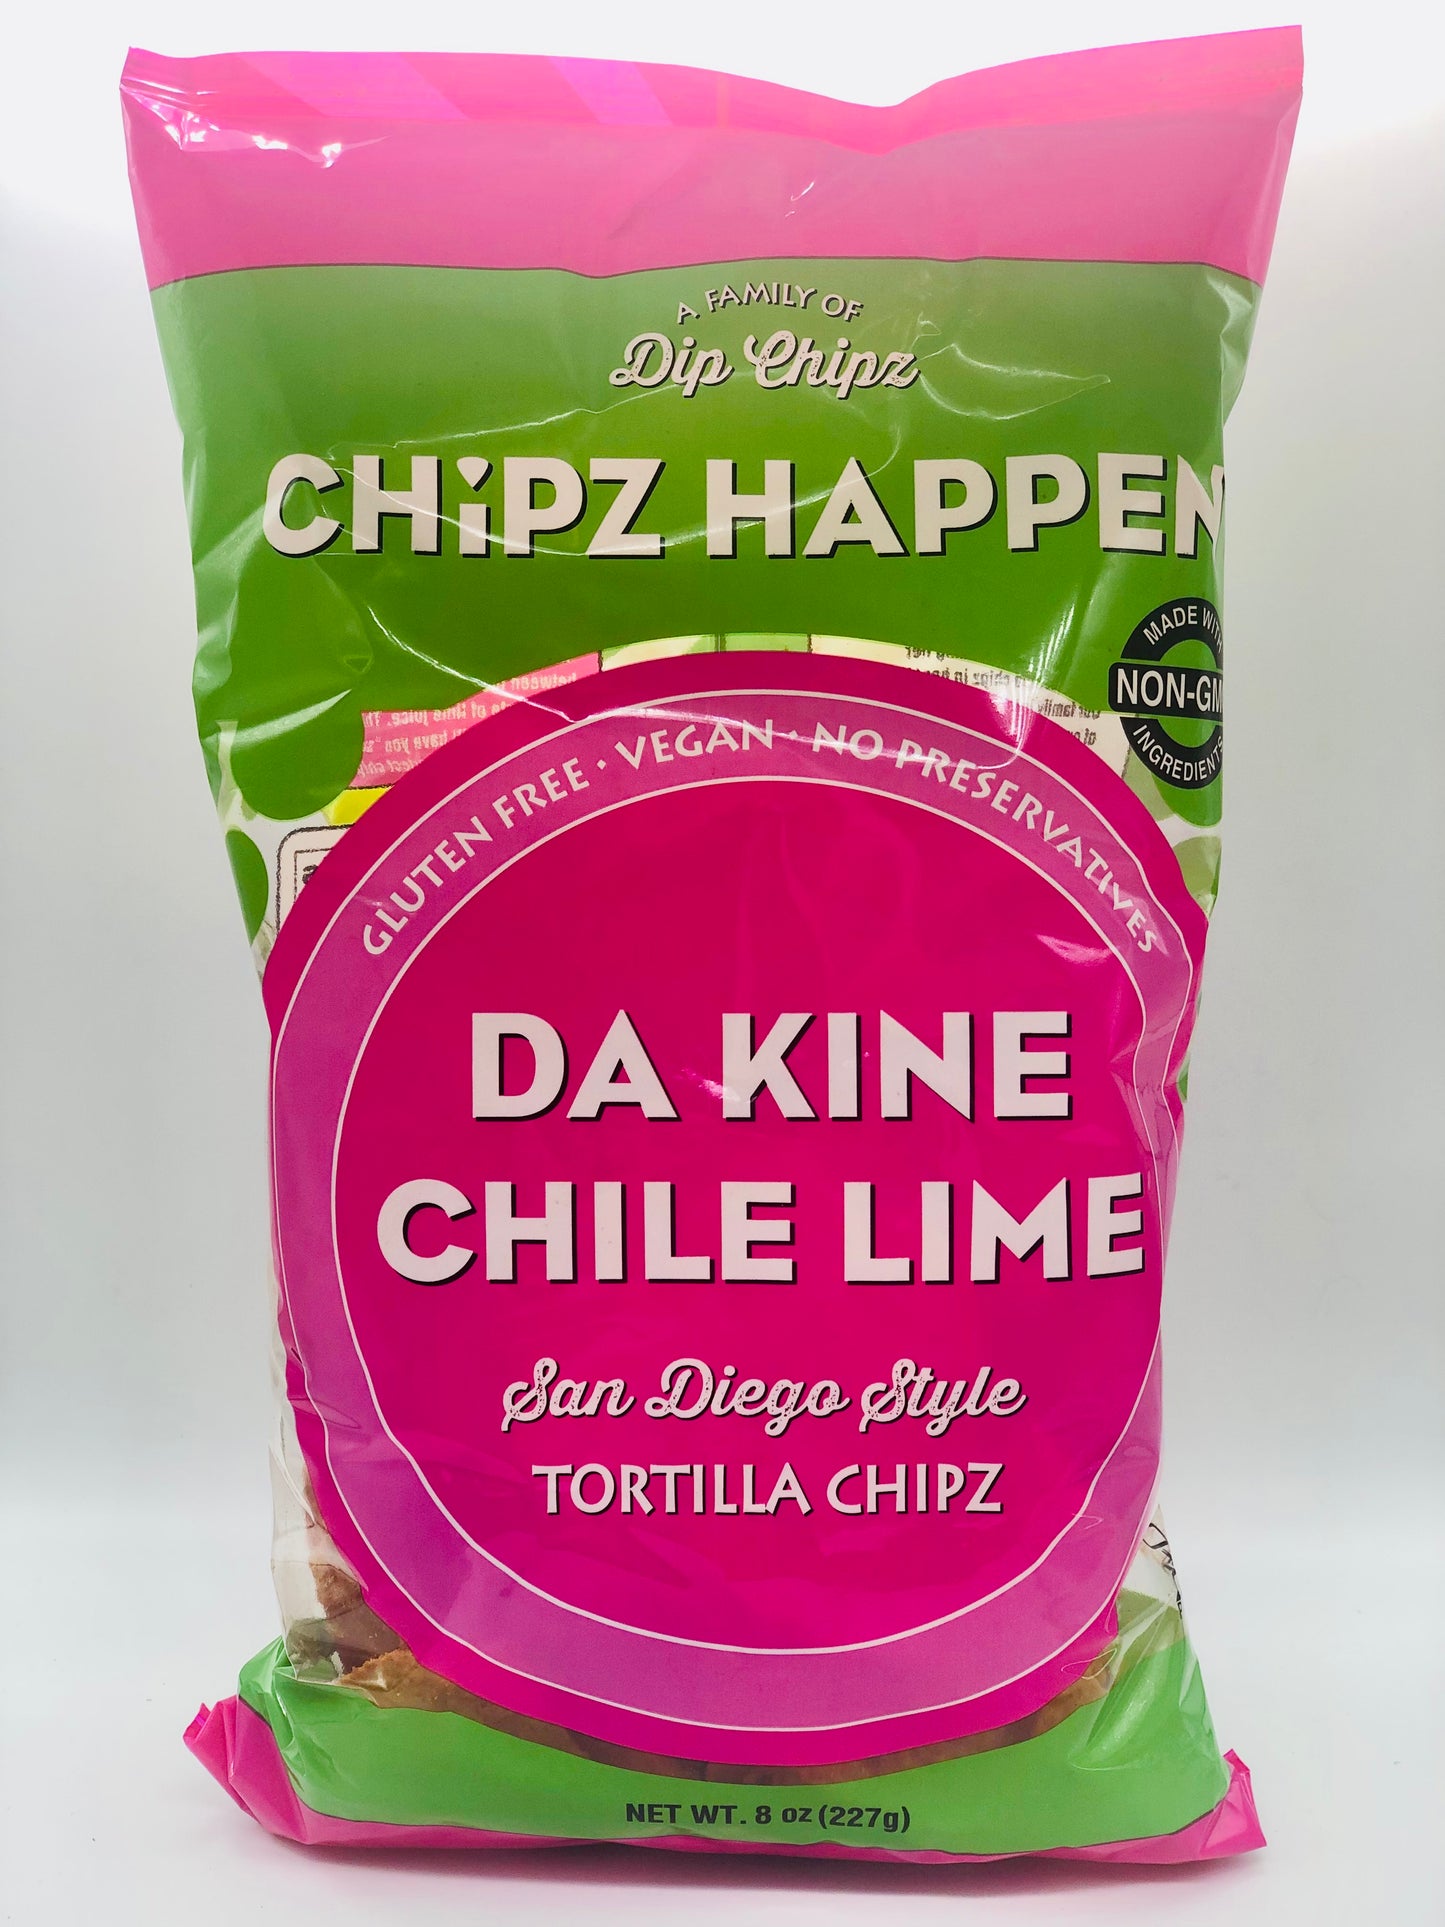 8oz DaKine Chile Lime Tortilla Chipz -4 Pack